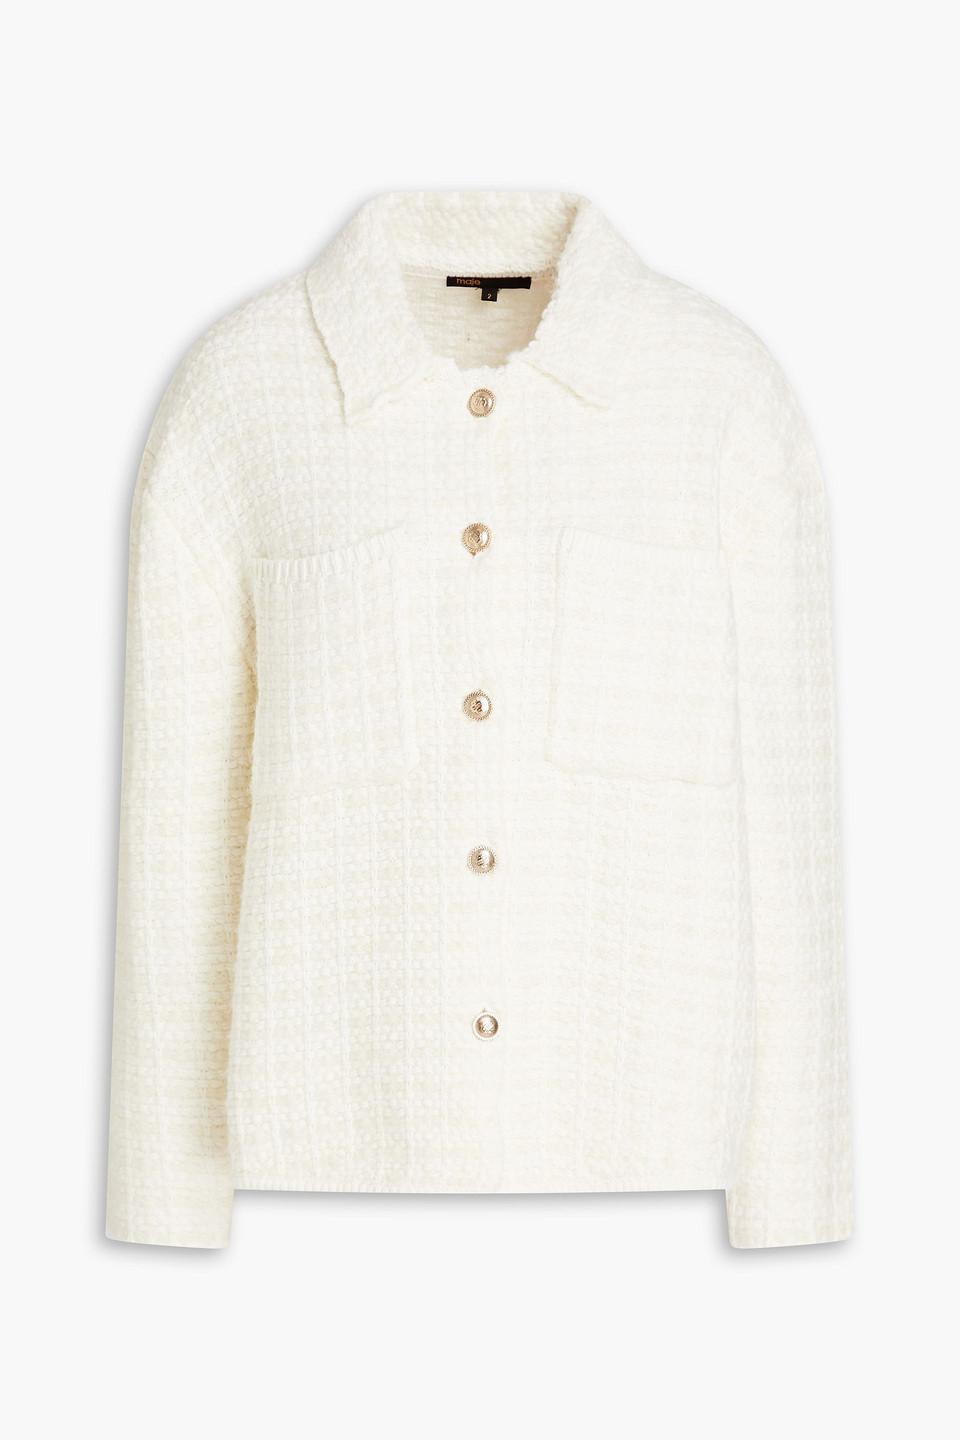 Maje Tweed Jacket in White | Lyst UK